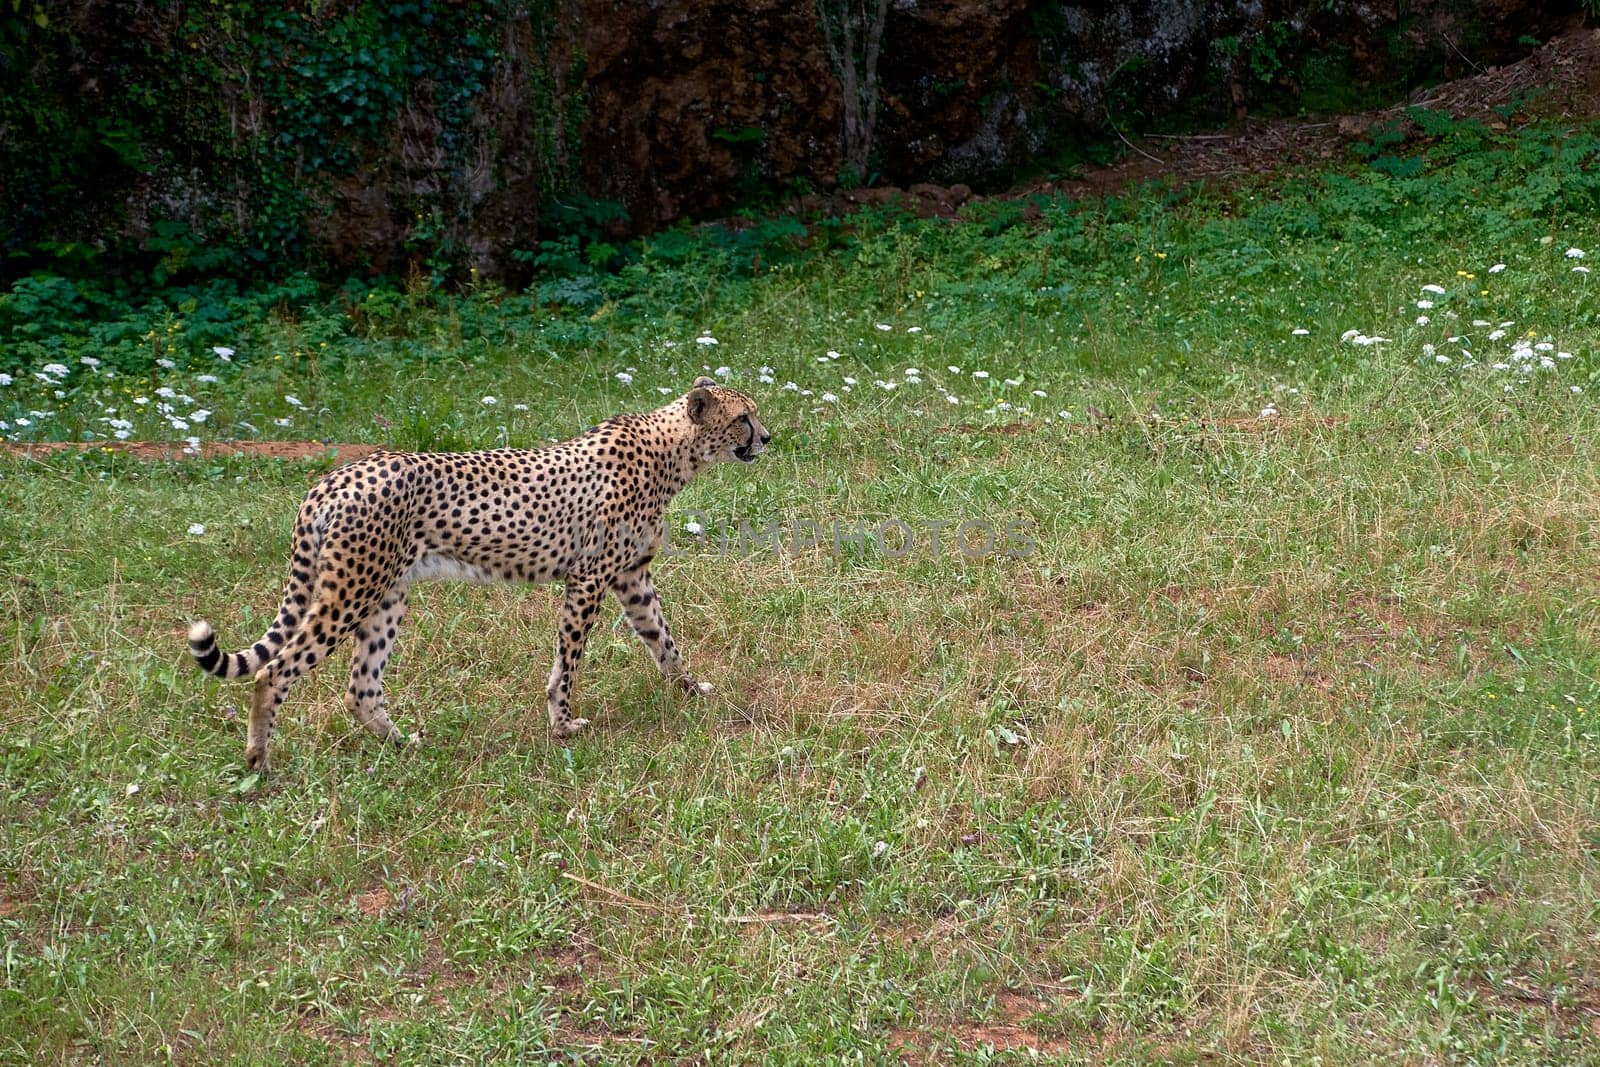 A cheetah standing upright on the dry savannah by raul_ruiz